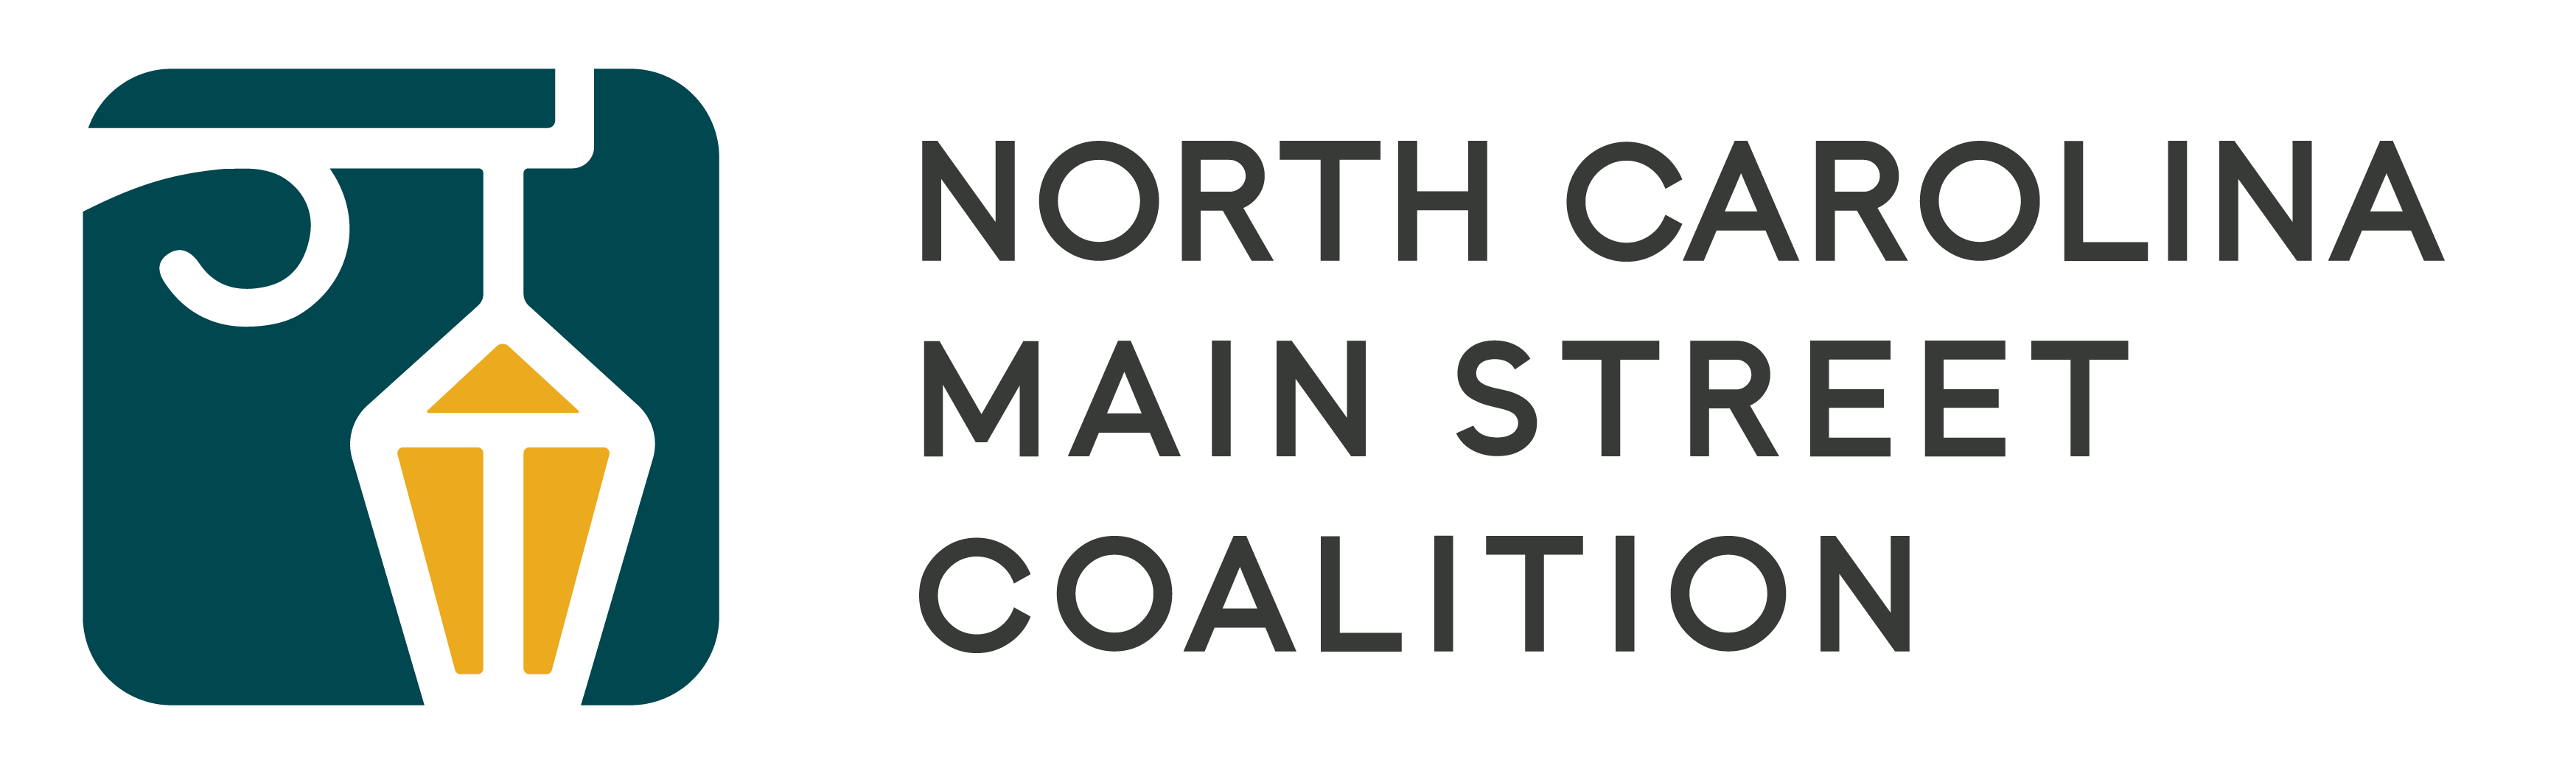 North Carolina Main Street Coalition